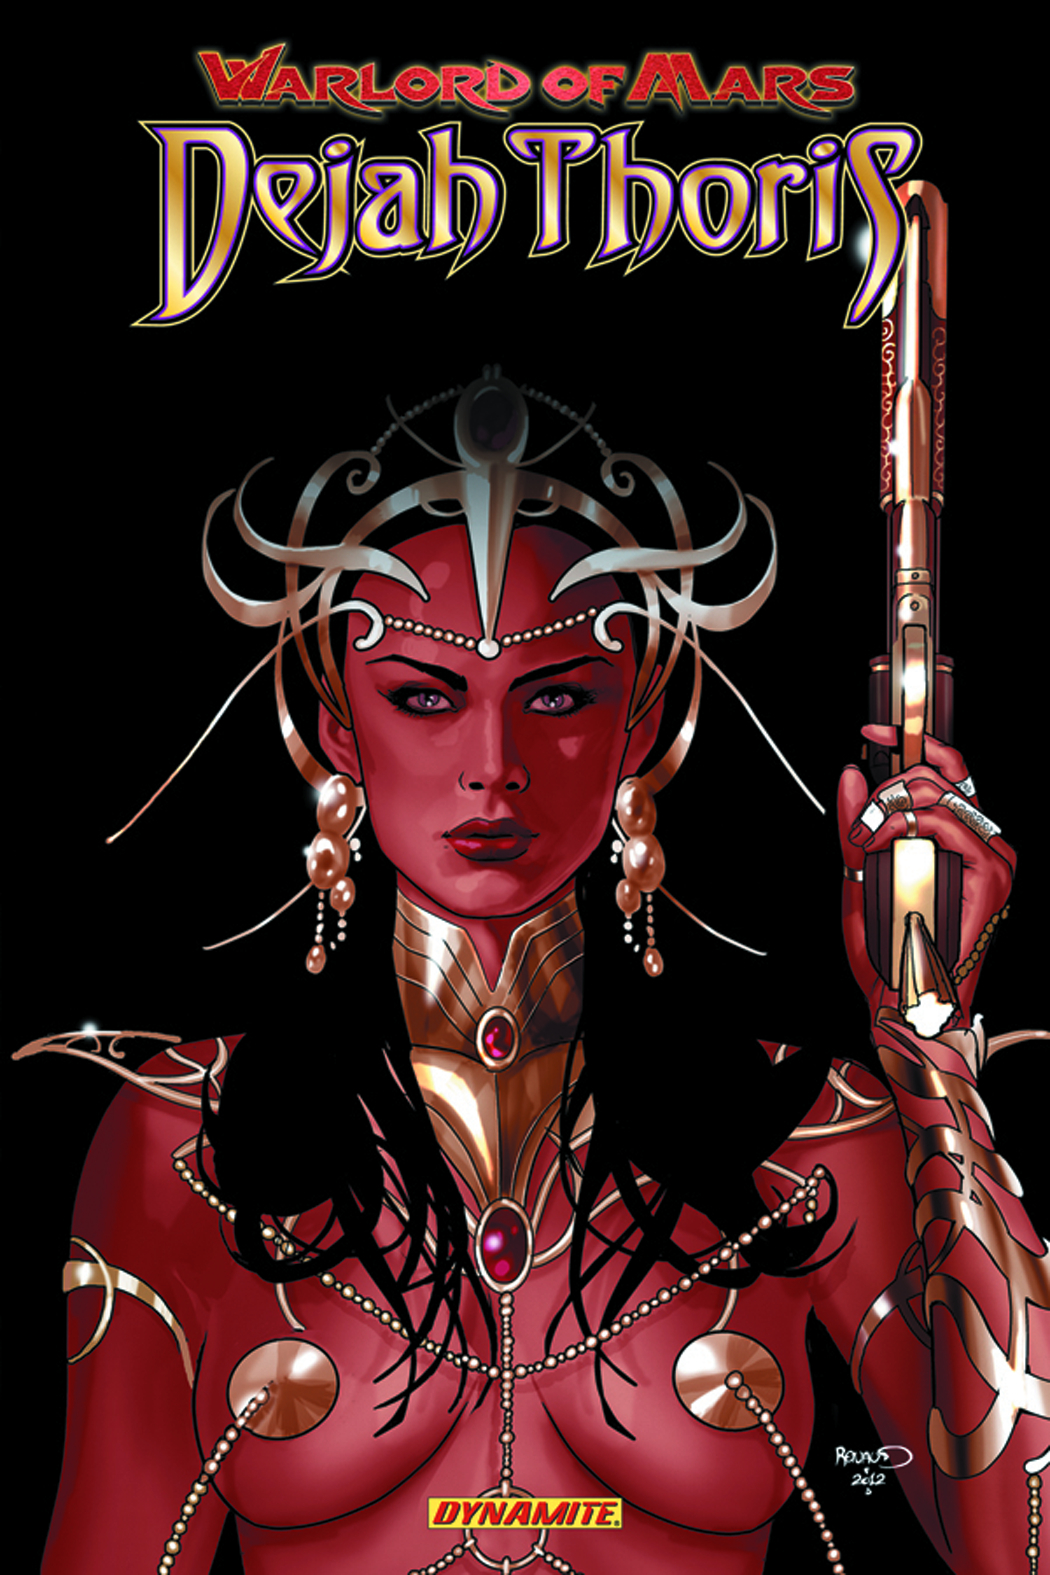 Warlord of Mars Dejah Thoris Graphic Novel Volume 5